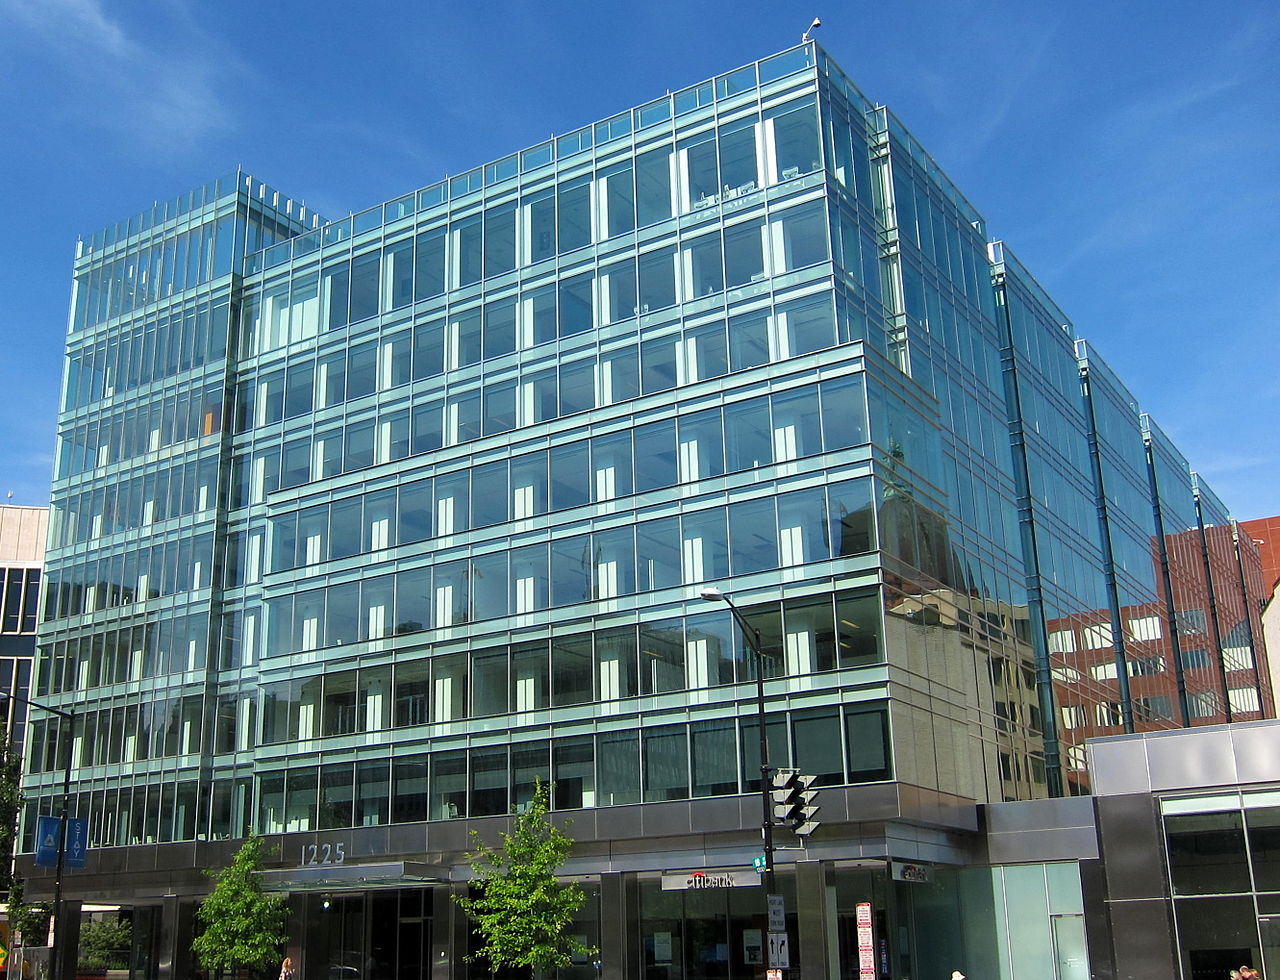 LEED building in Washington DC